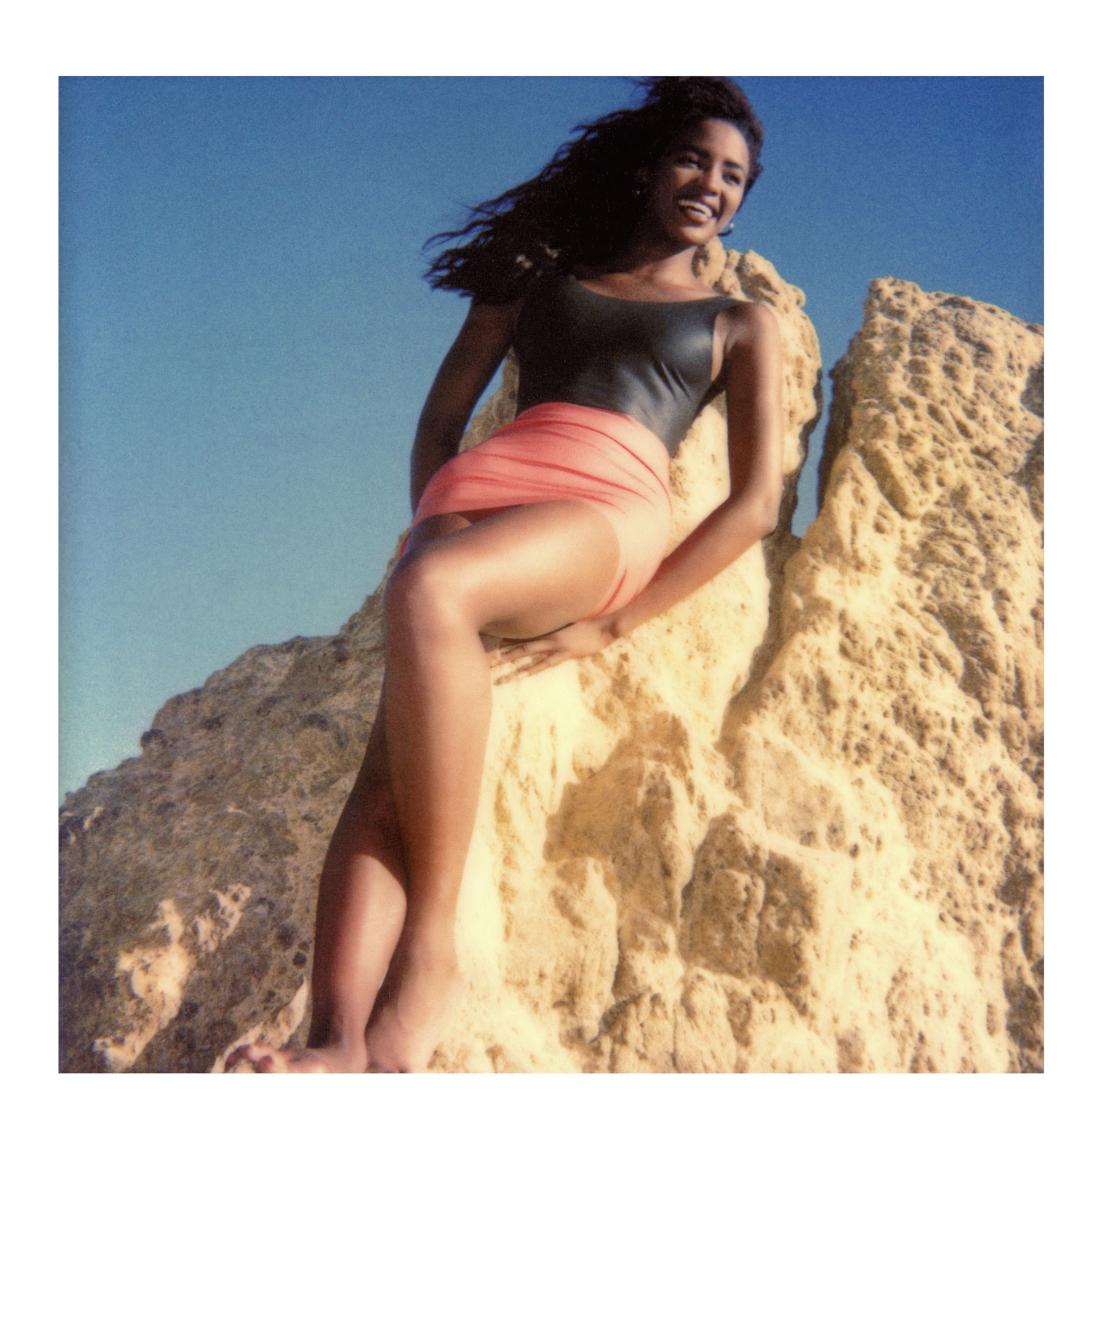 Maripol Portrait Photograph - Naomi Campbell, "Rocking" - Zuma Beach, CA